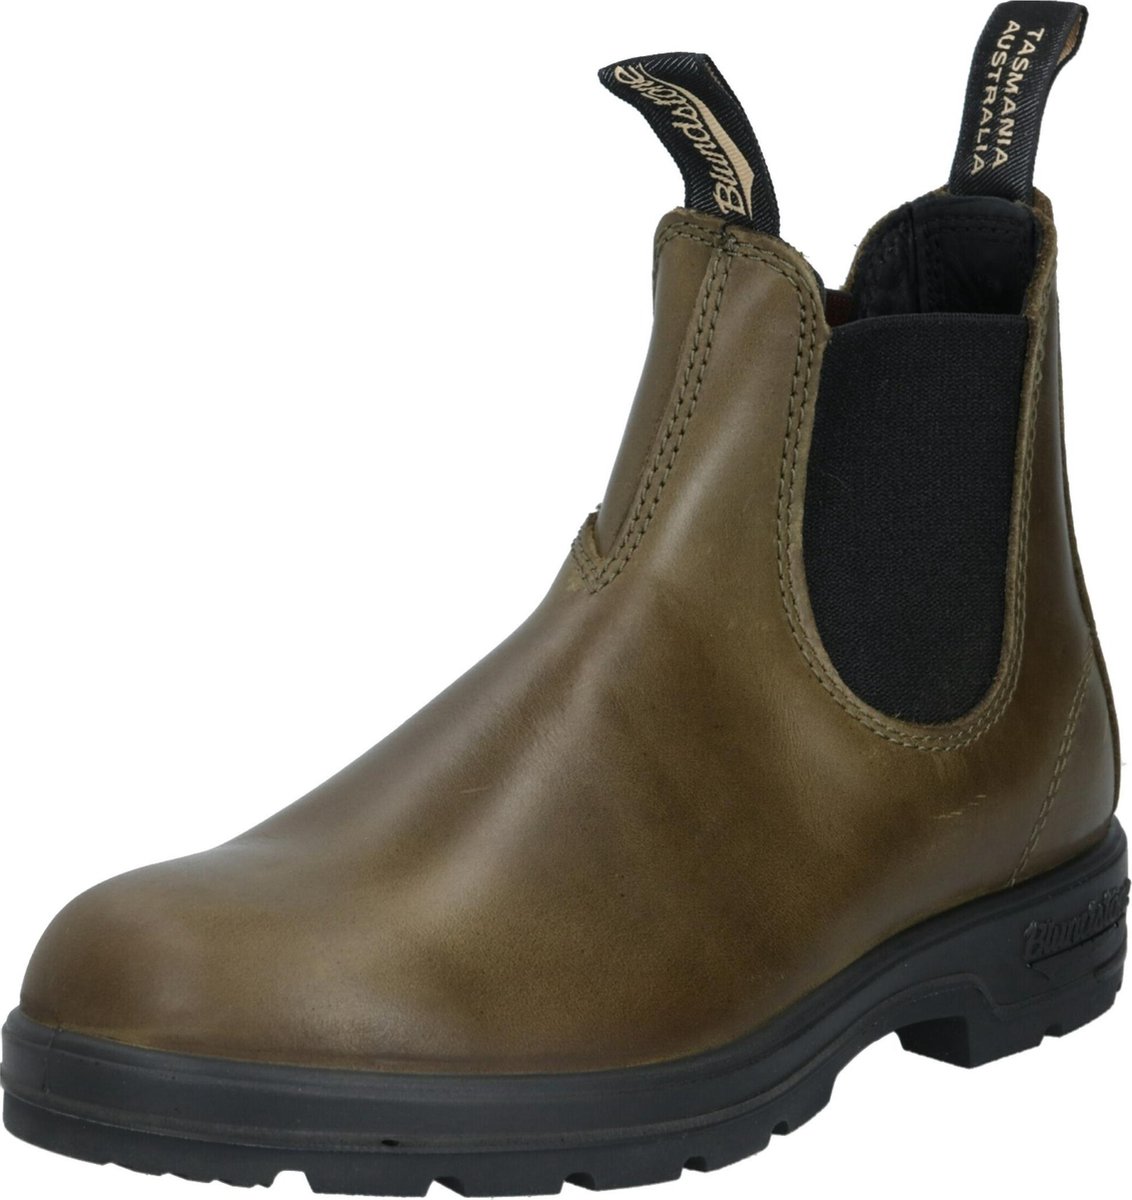 Blundstone Stiefel Boots #2052 Leather (550 Series) Dark Green-6UK